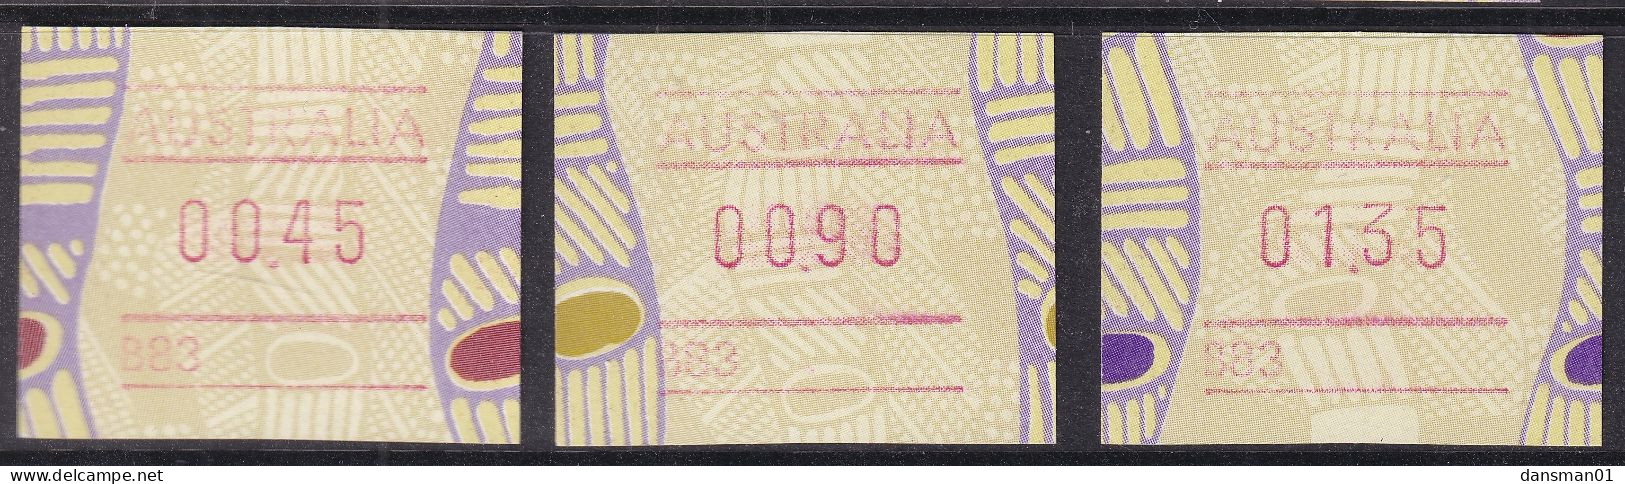 Australia 1999 Frama Button Set (3) Mint Never Hinged B83 - Mint Stamps